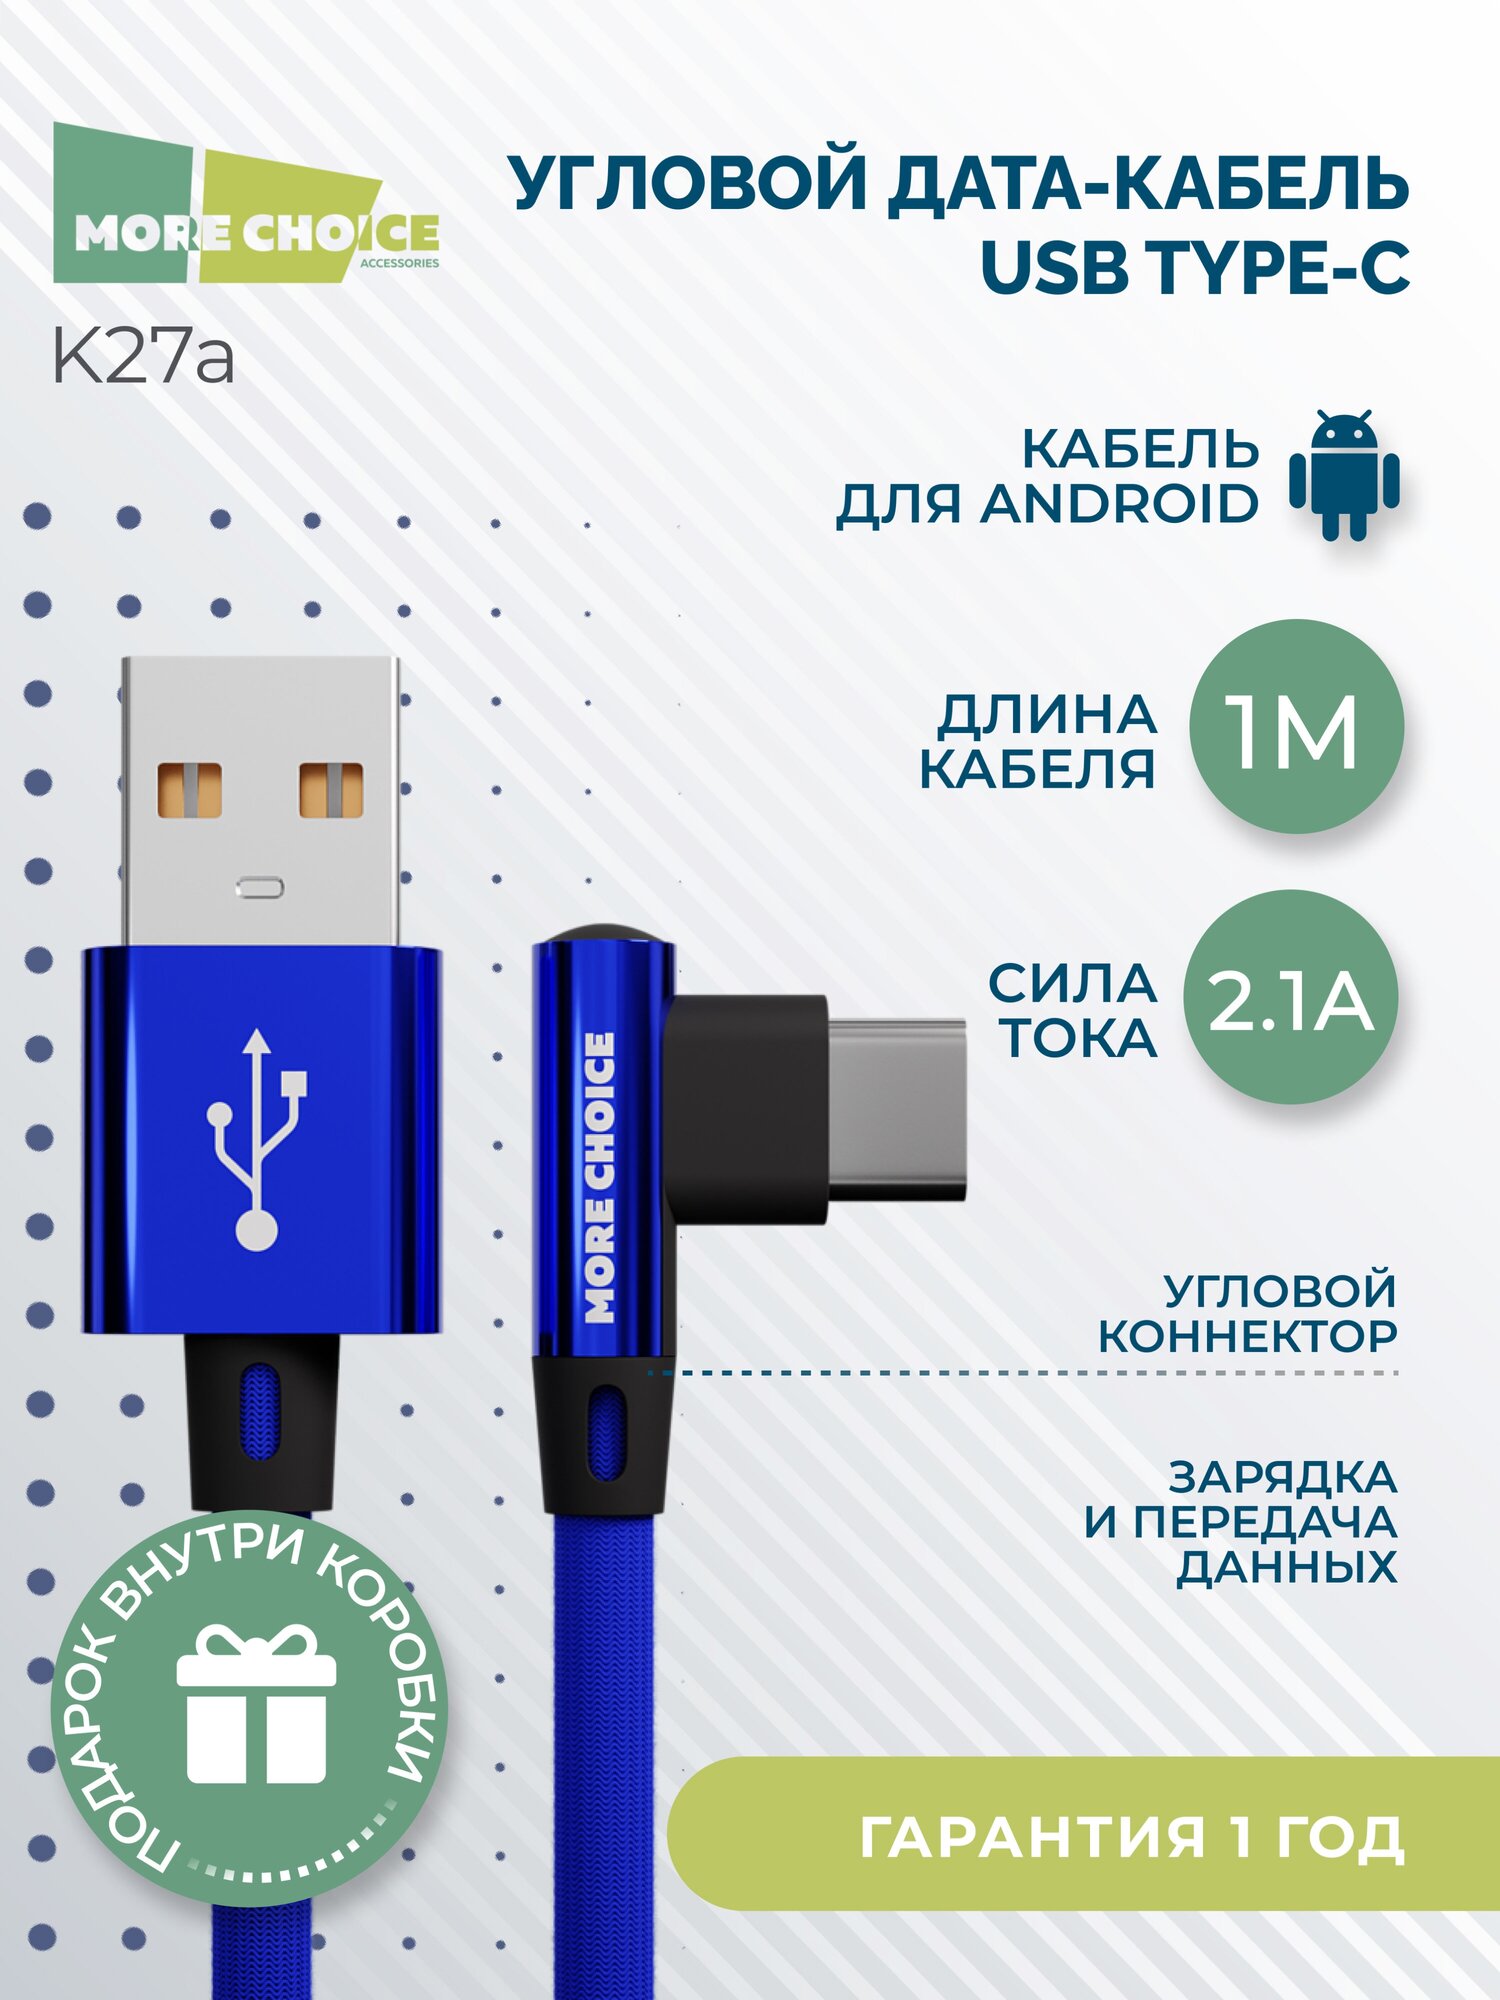 Дата-кабель USB 2.1A для Type-C More choice K27a нейлон 1м Blue